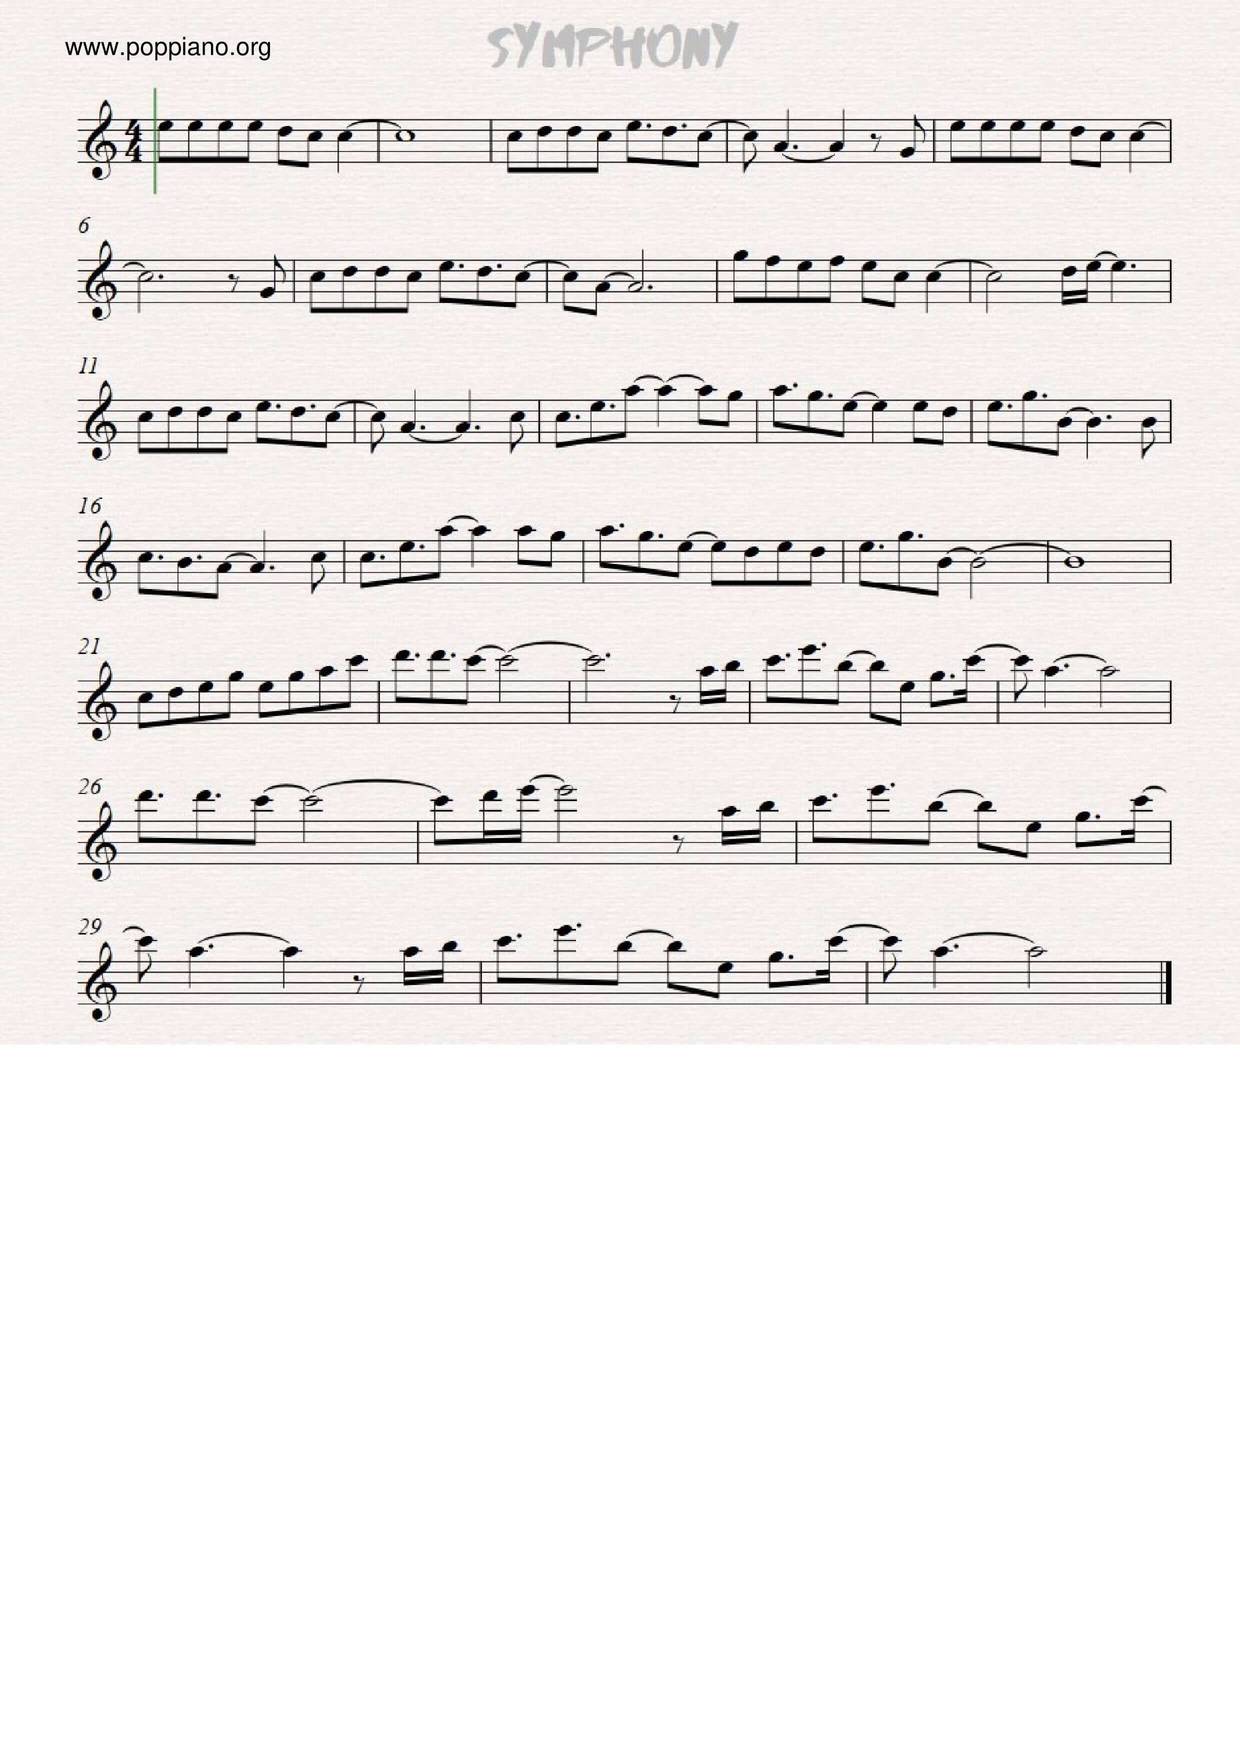 Cleam Bendit Symphony Violin Score Pdf Free Score Download